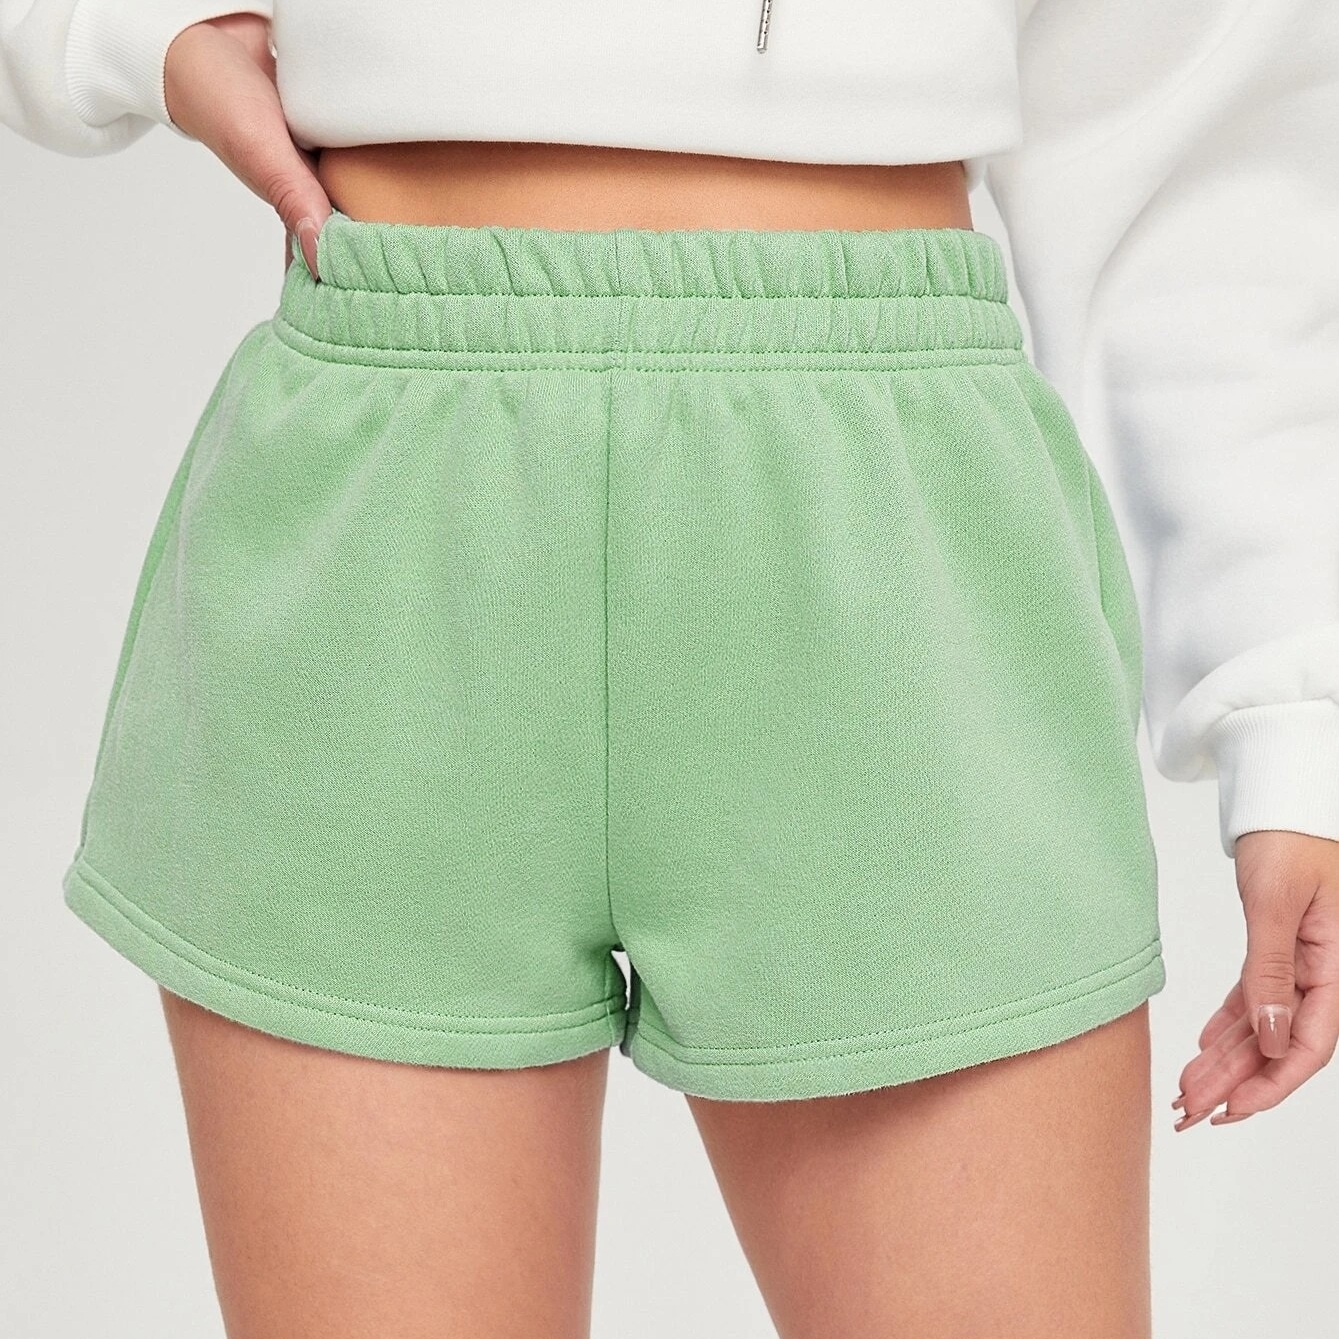 Elastic Waist Sweat Shorts - Mint Green, M